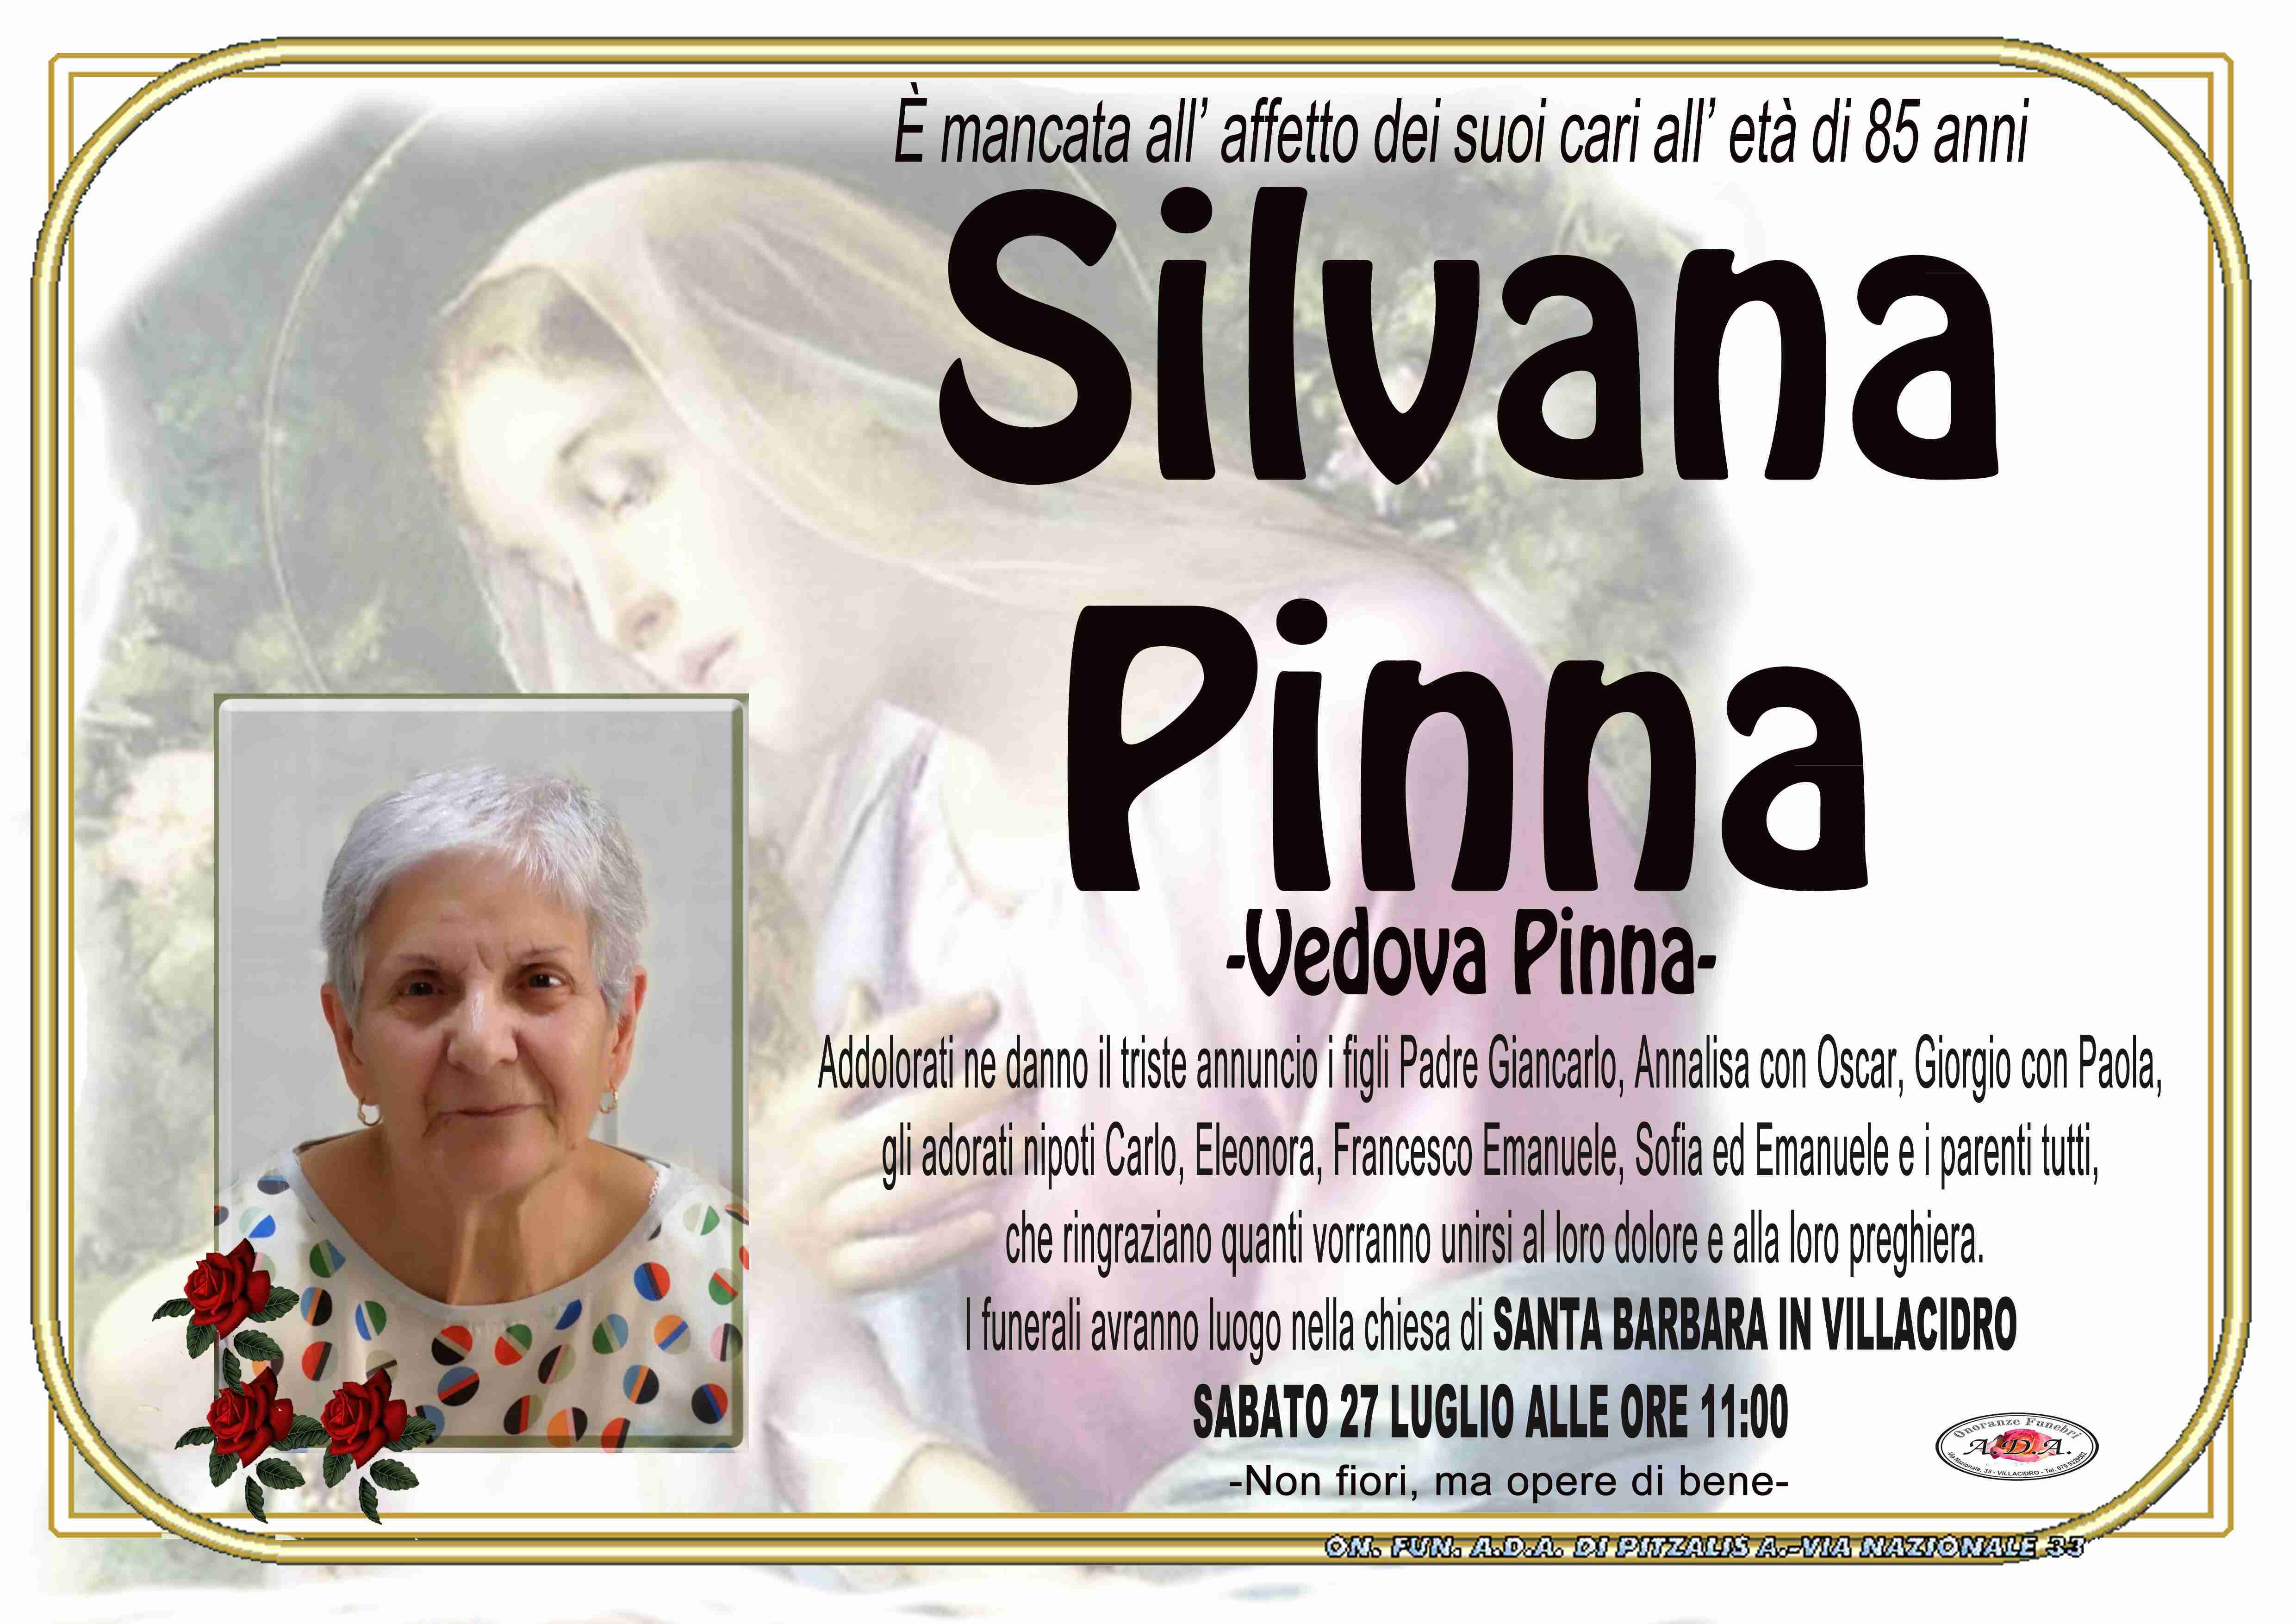 Silvana Pinna